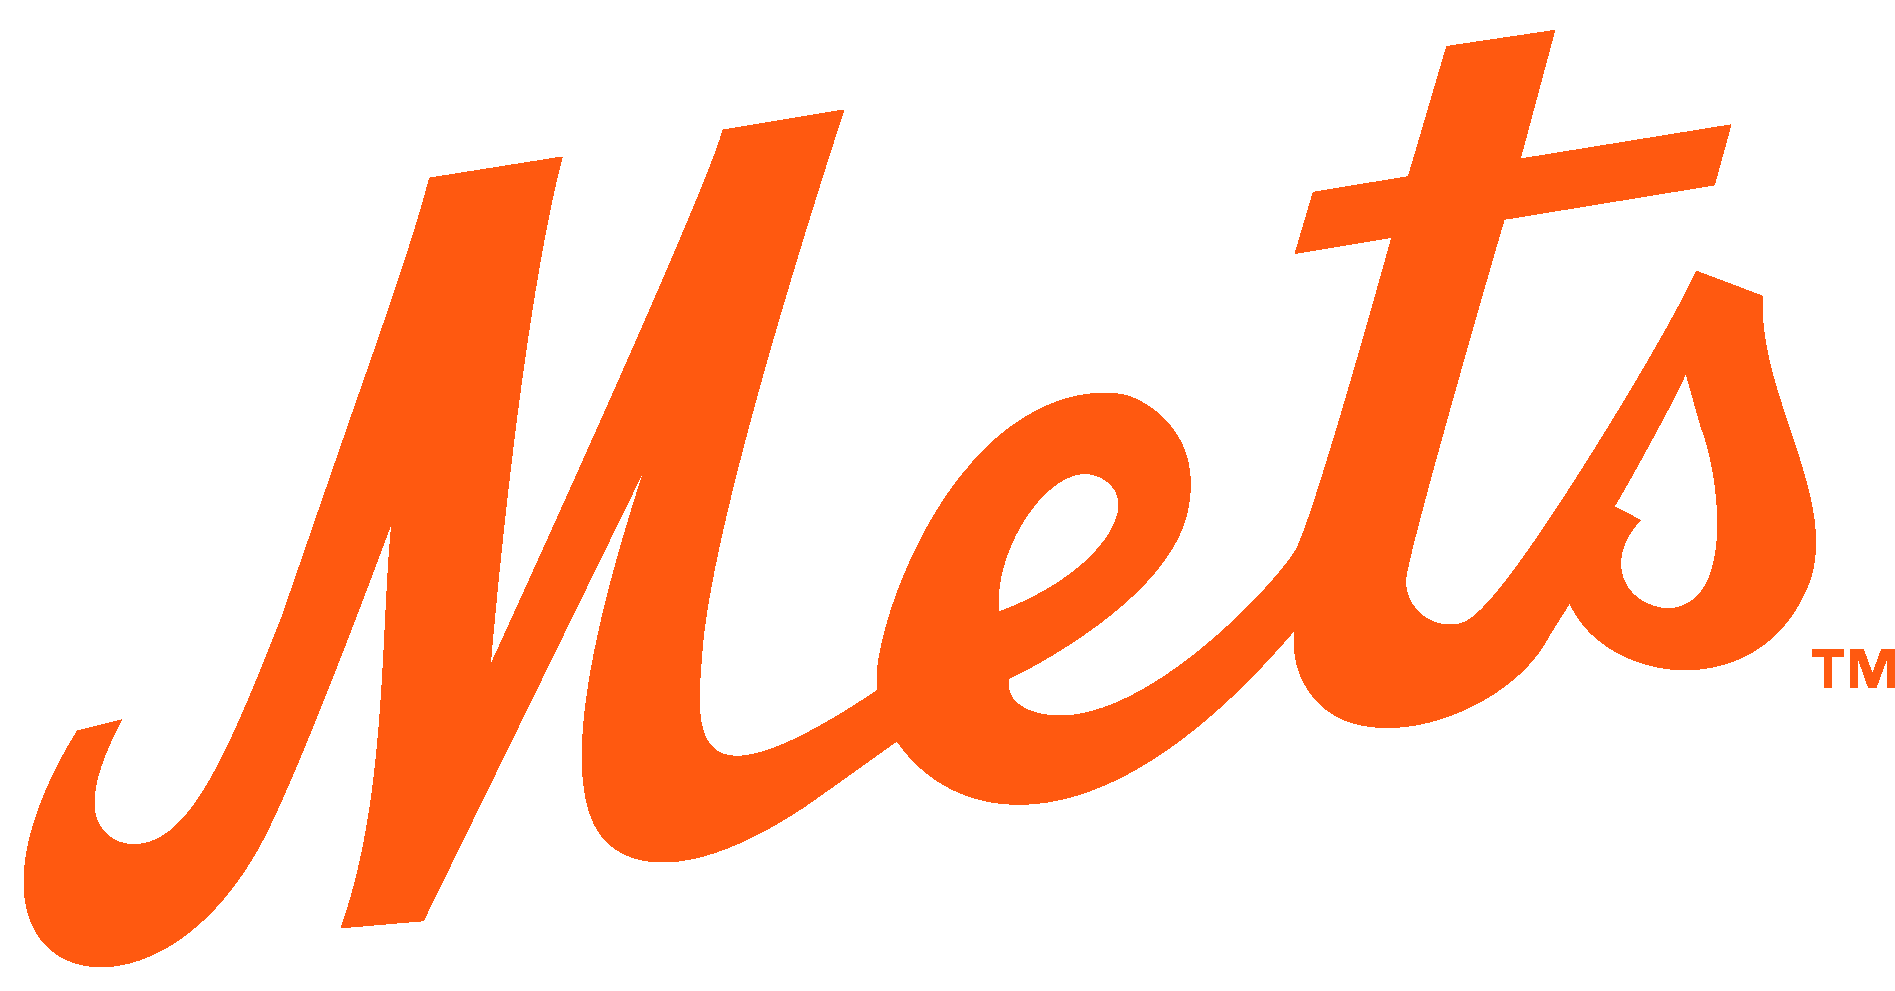 Mets Logo PNG Transparent Images - PNG All